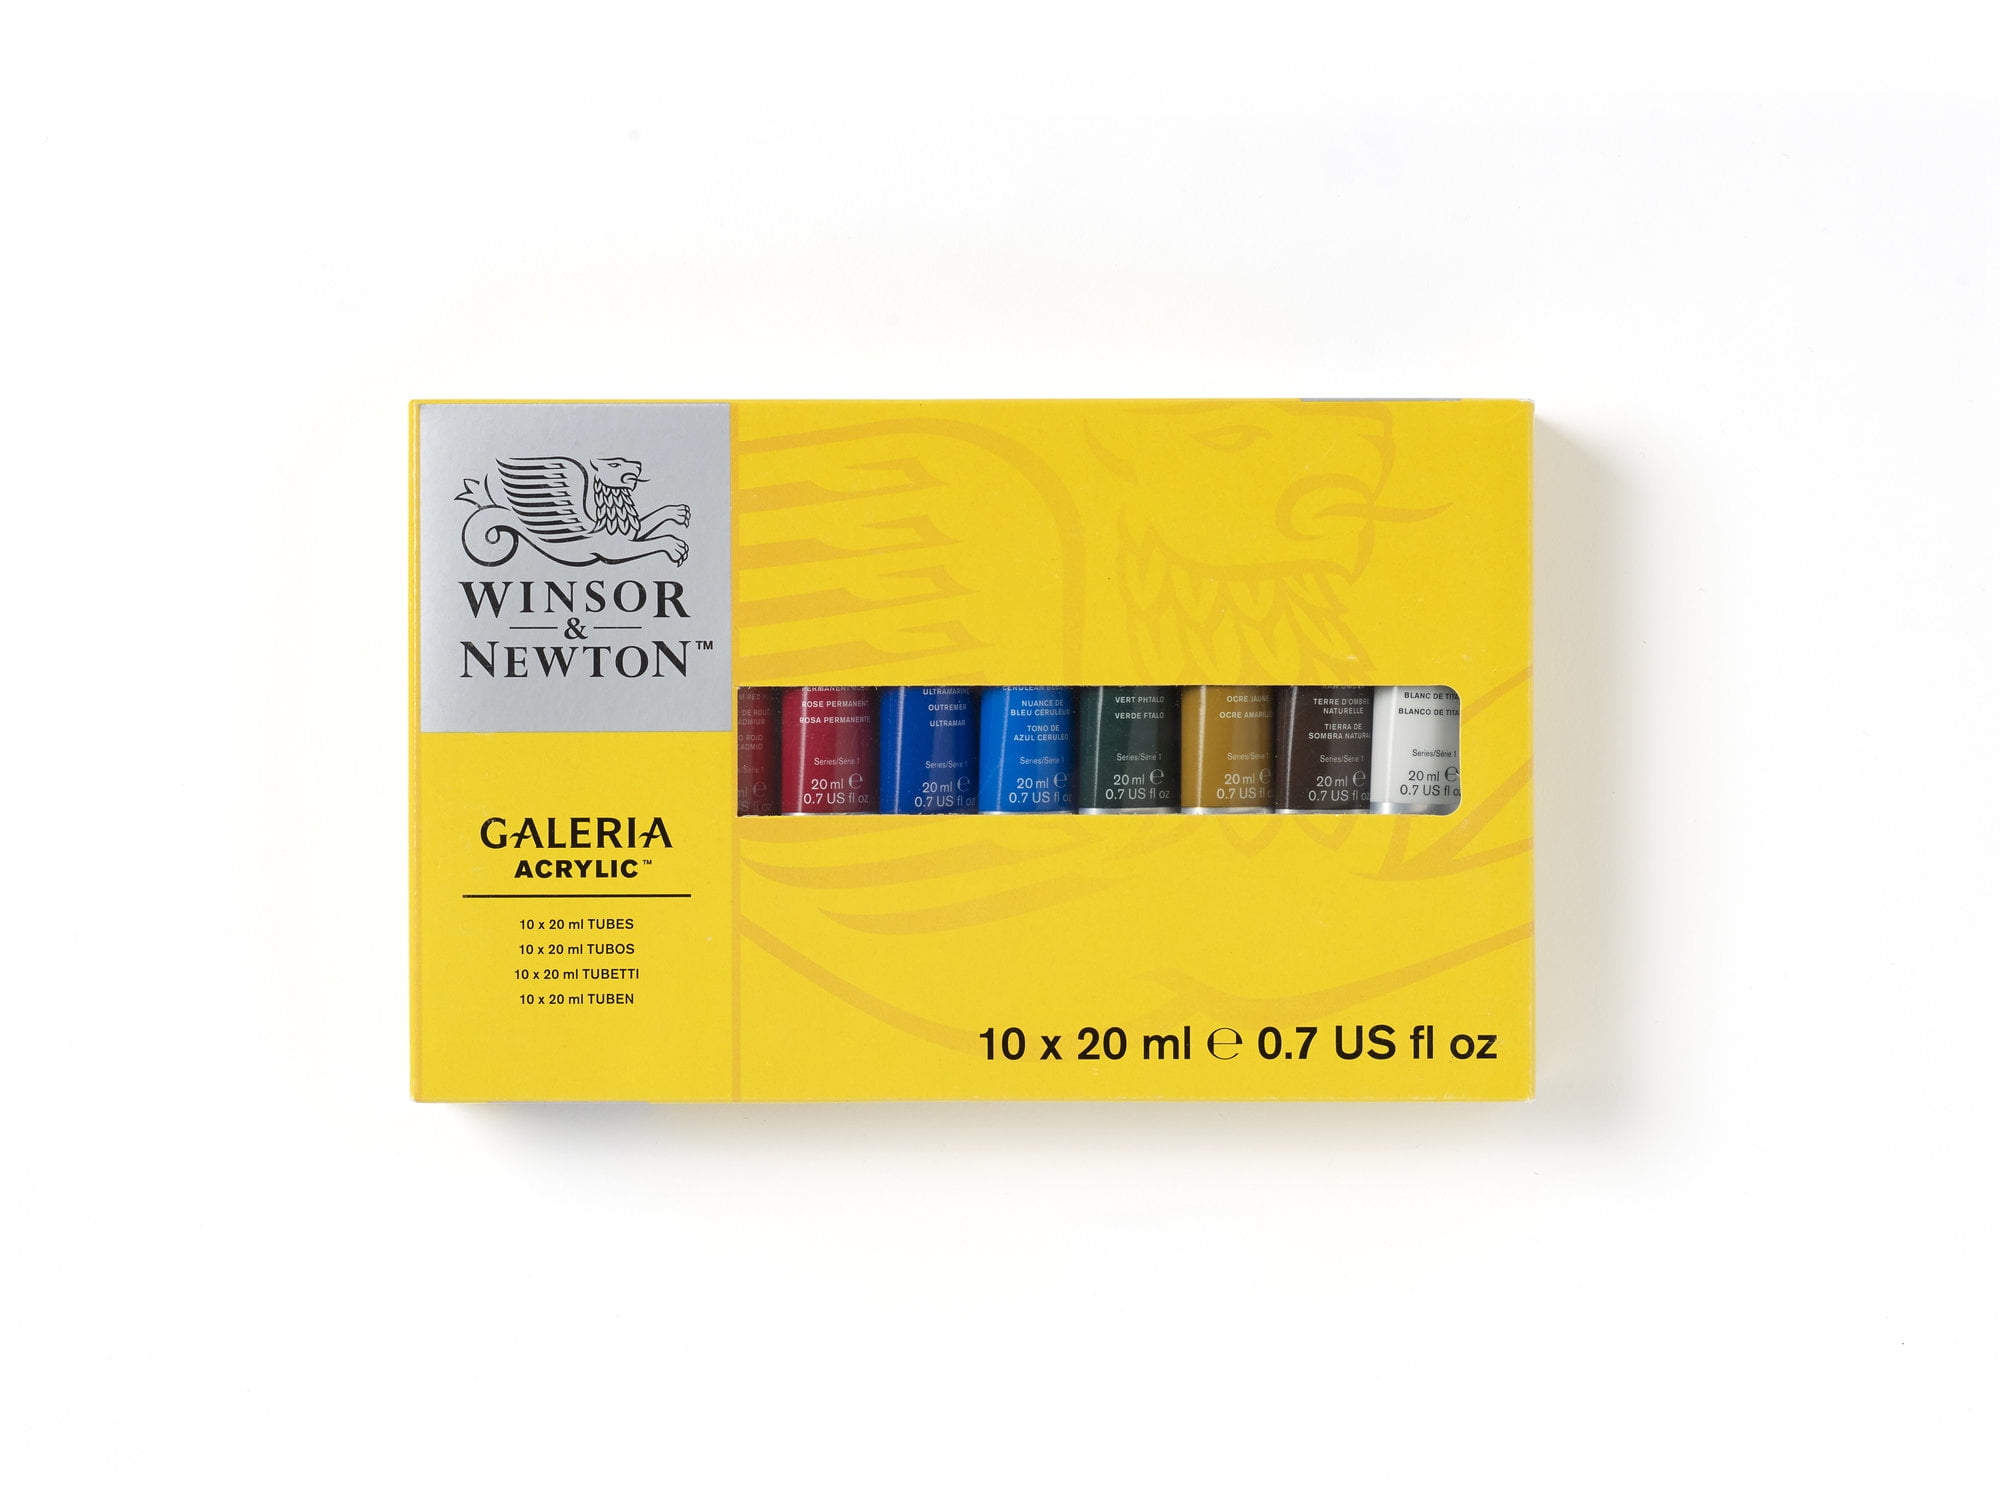 Winsor & Newton Galeria Acrylic Paint Set, Includes 10 20mL tubes 